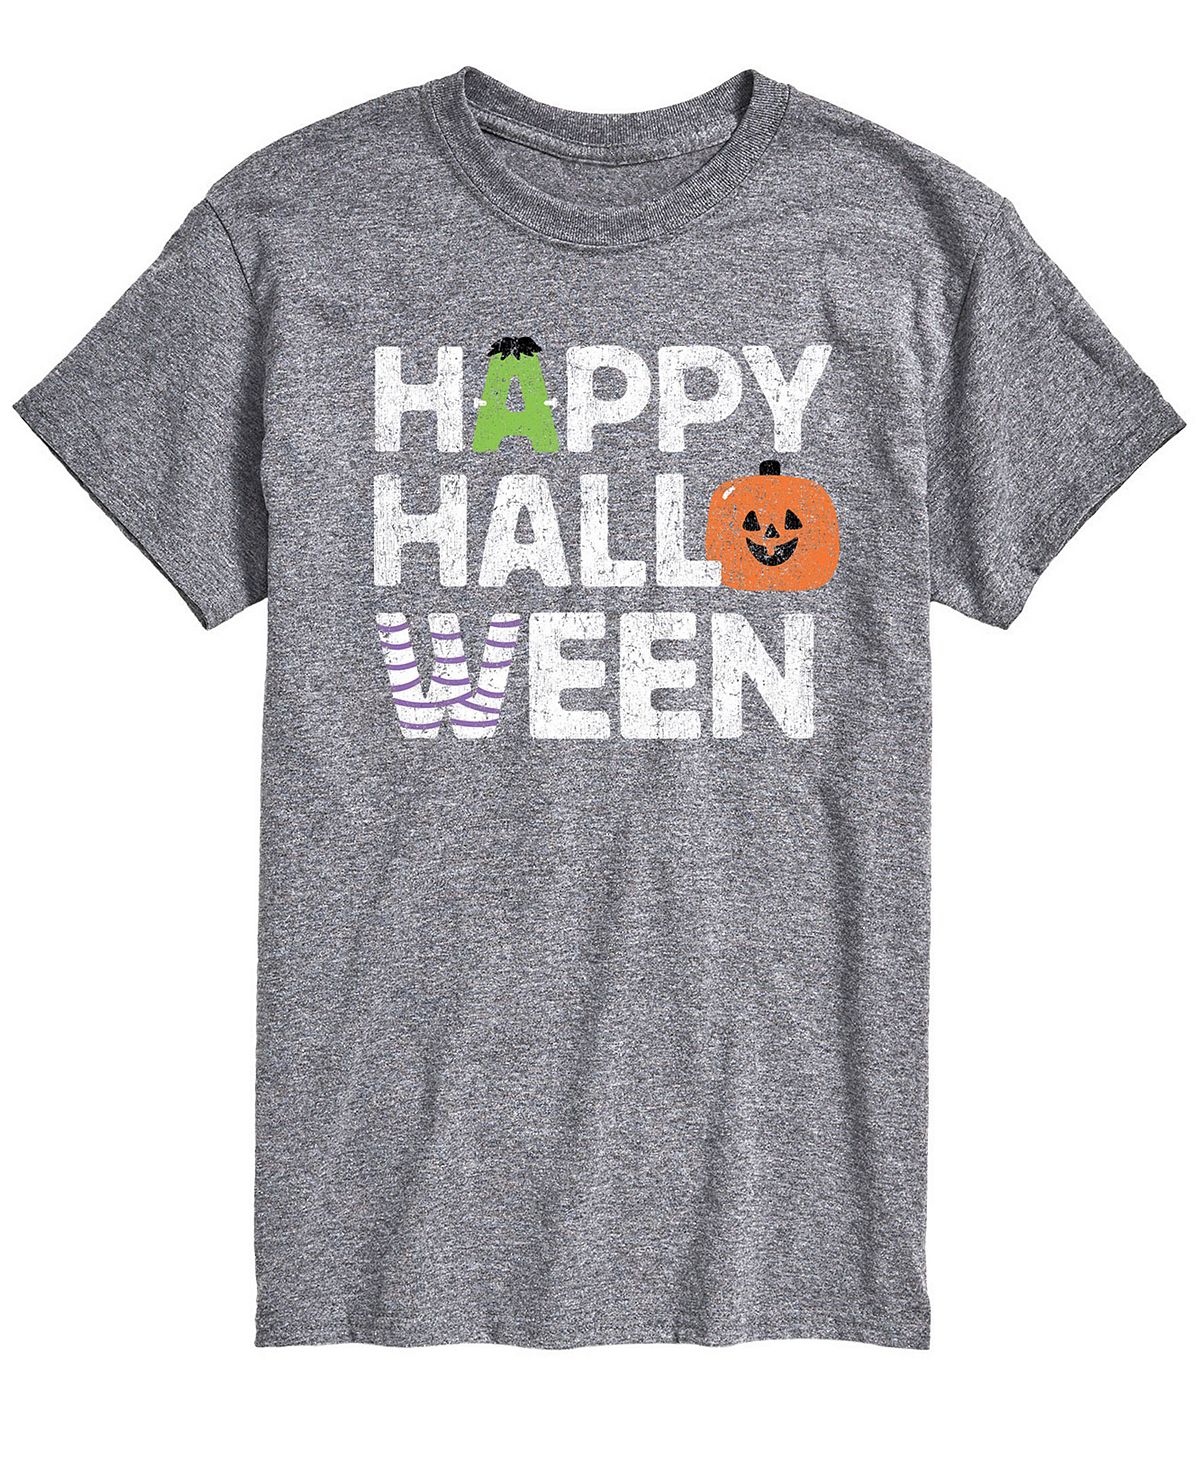 цена Мужская футболка классического кроя happy halloween AIRWAVES, серый